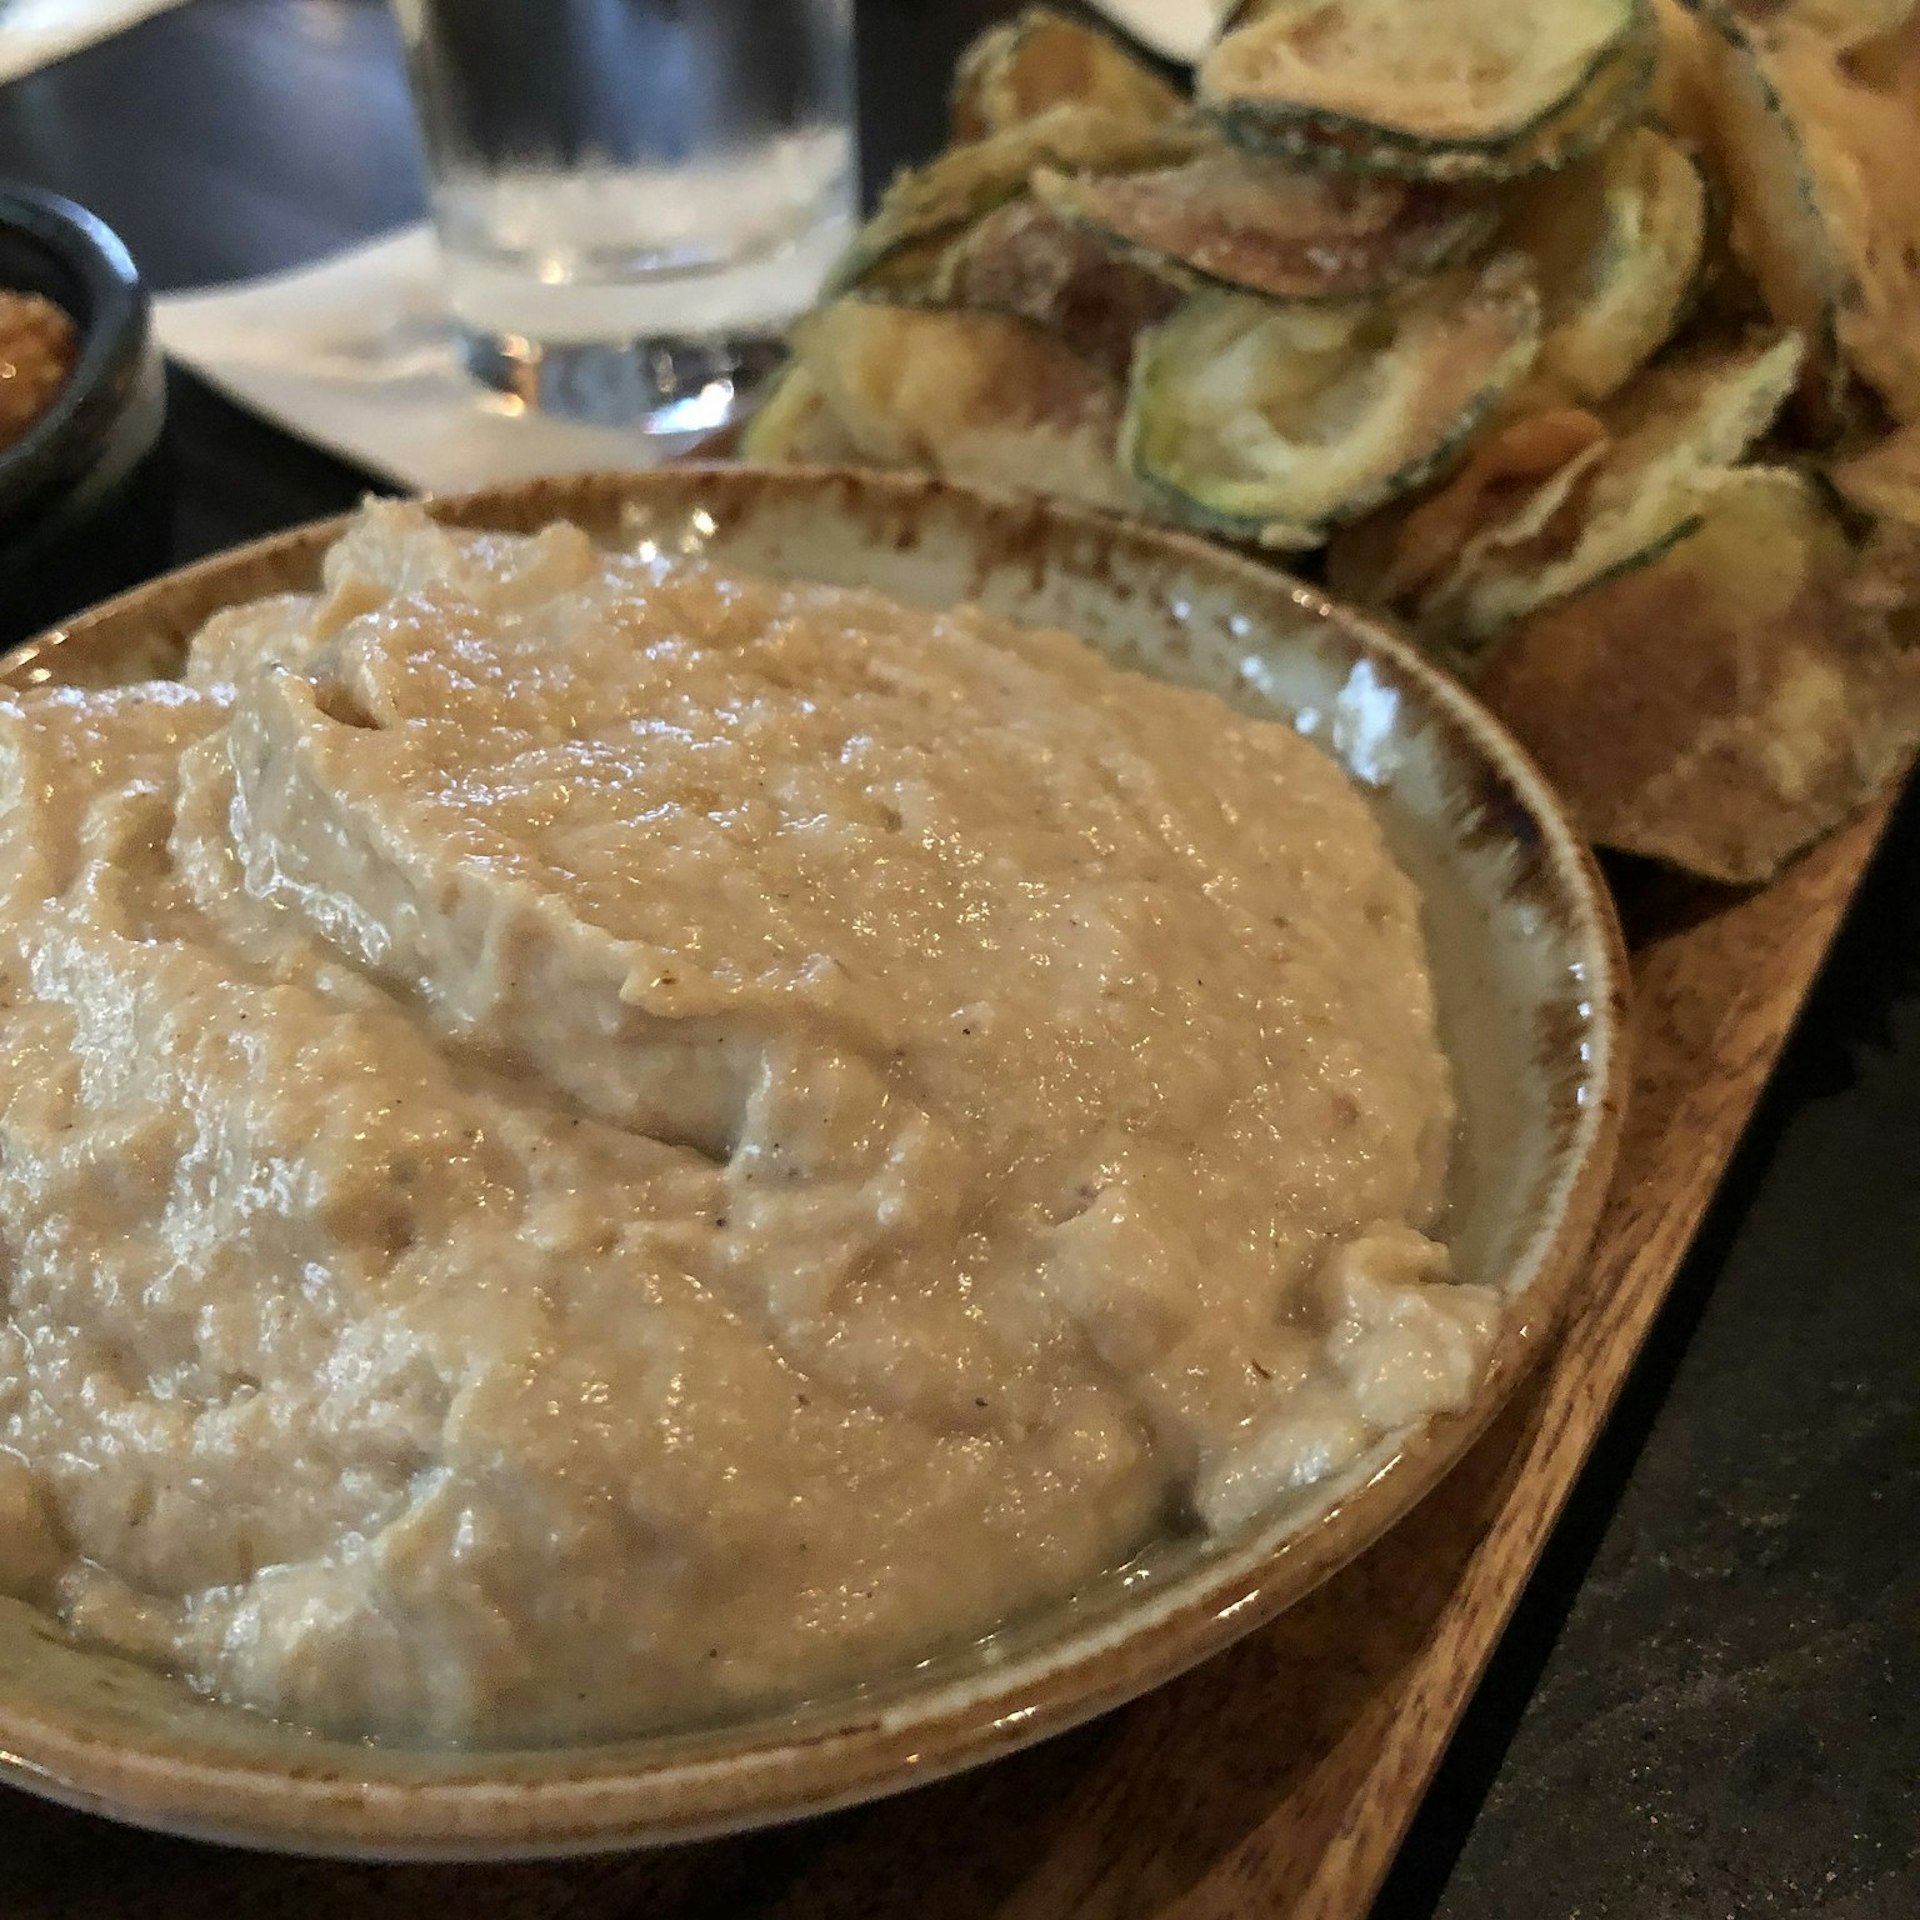 A dish of hummus at Committee Restaurant, Seaport District, Boston, Massachusetts, USA